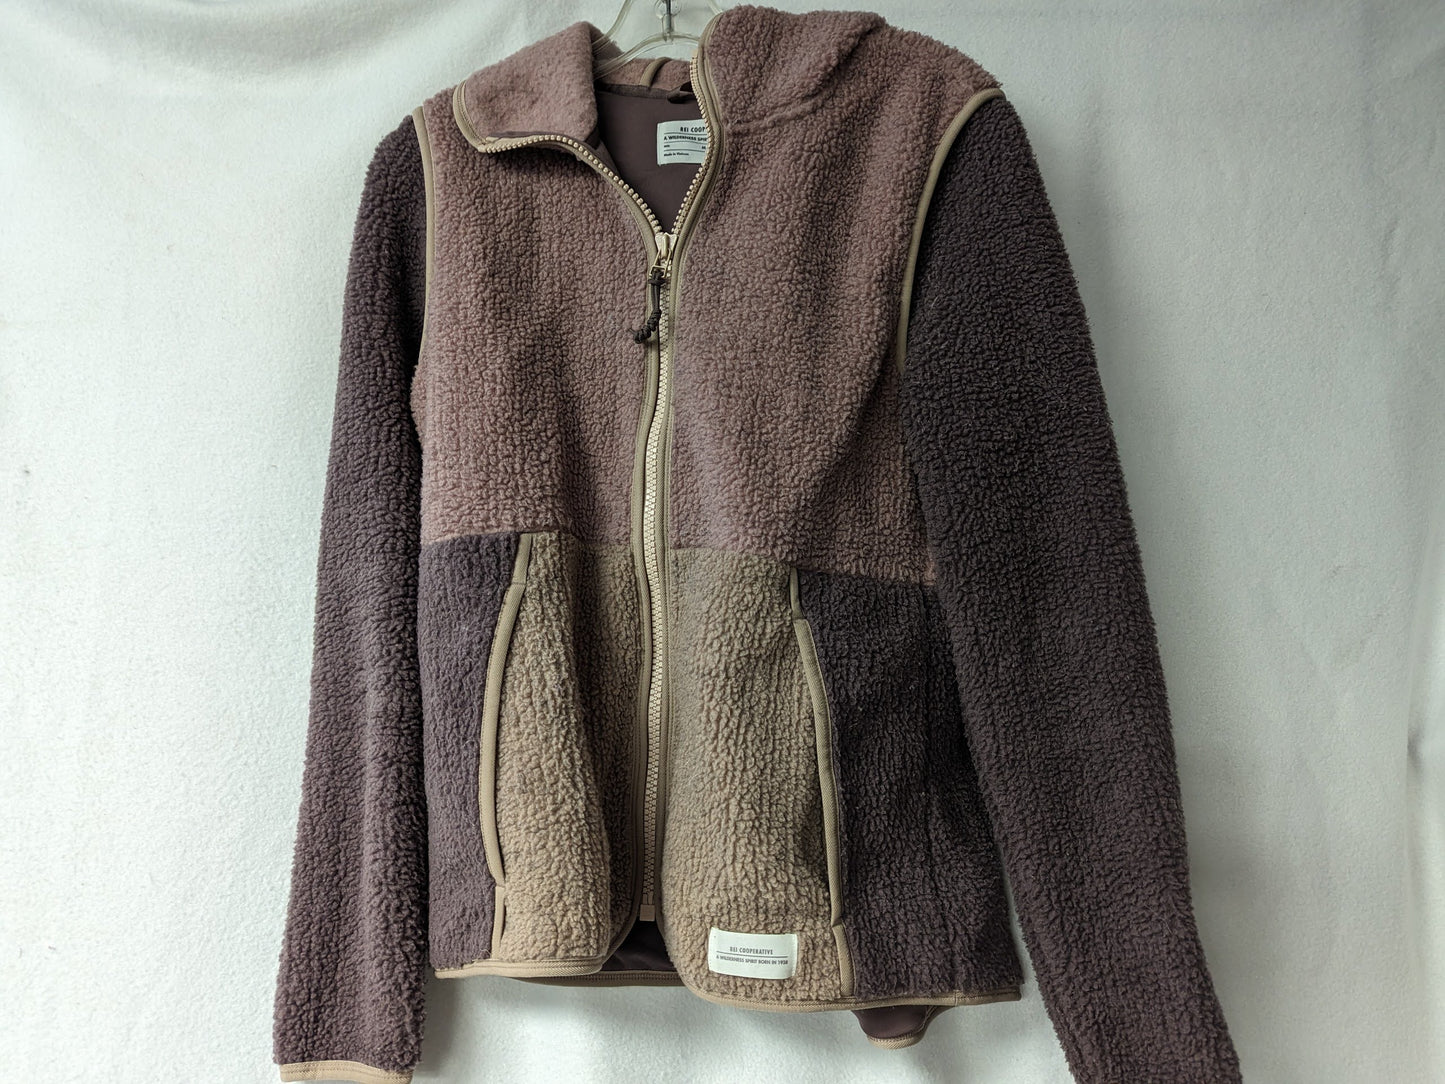 REI Women's Hooded Fleece Jacket/Coat Size Women Medium Color Brown Condition Used